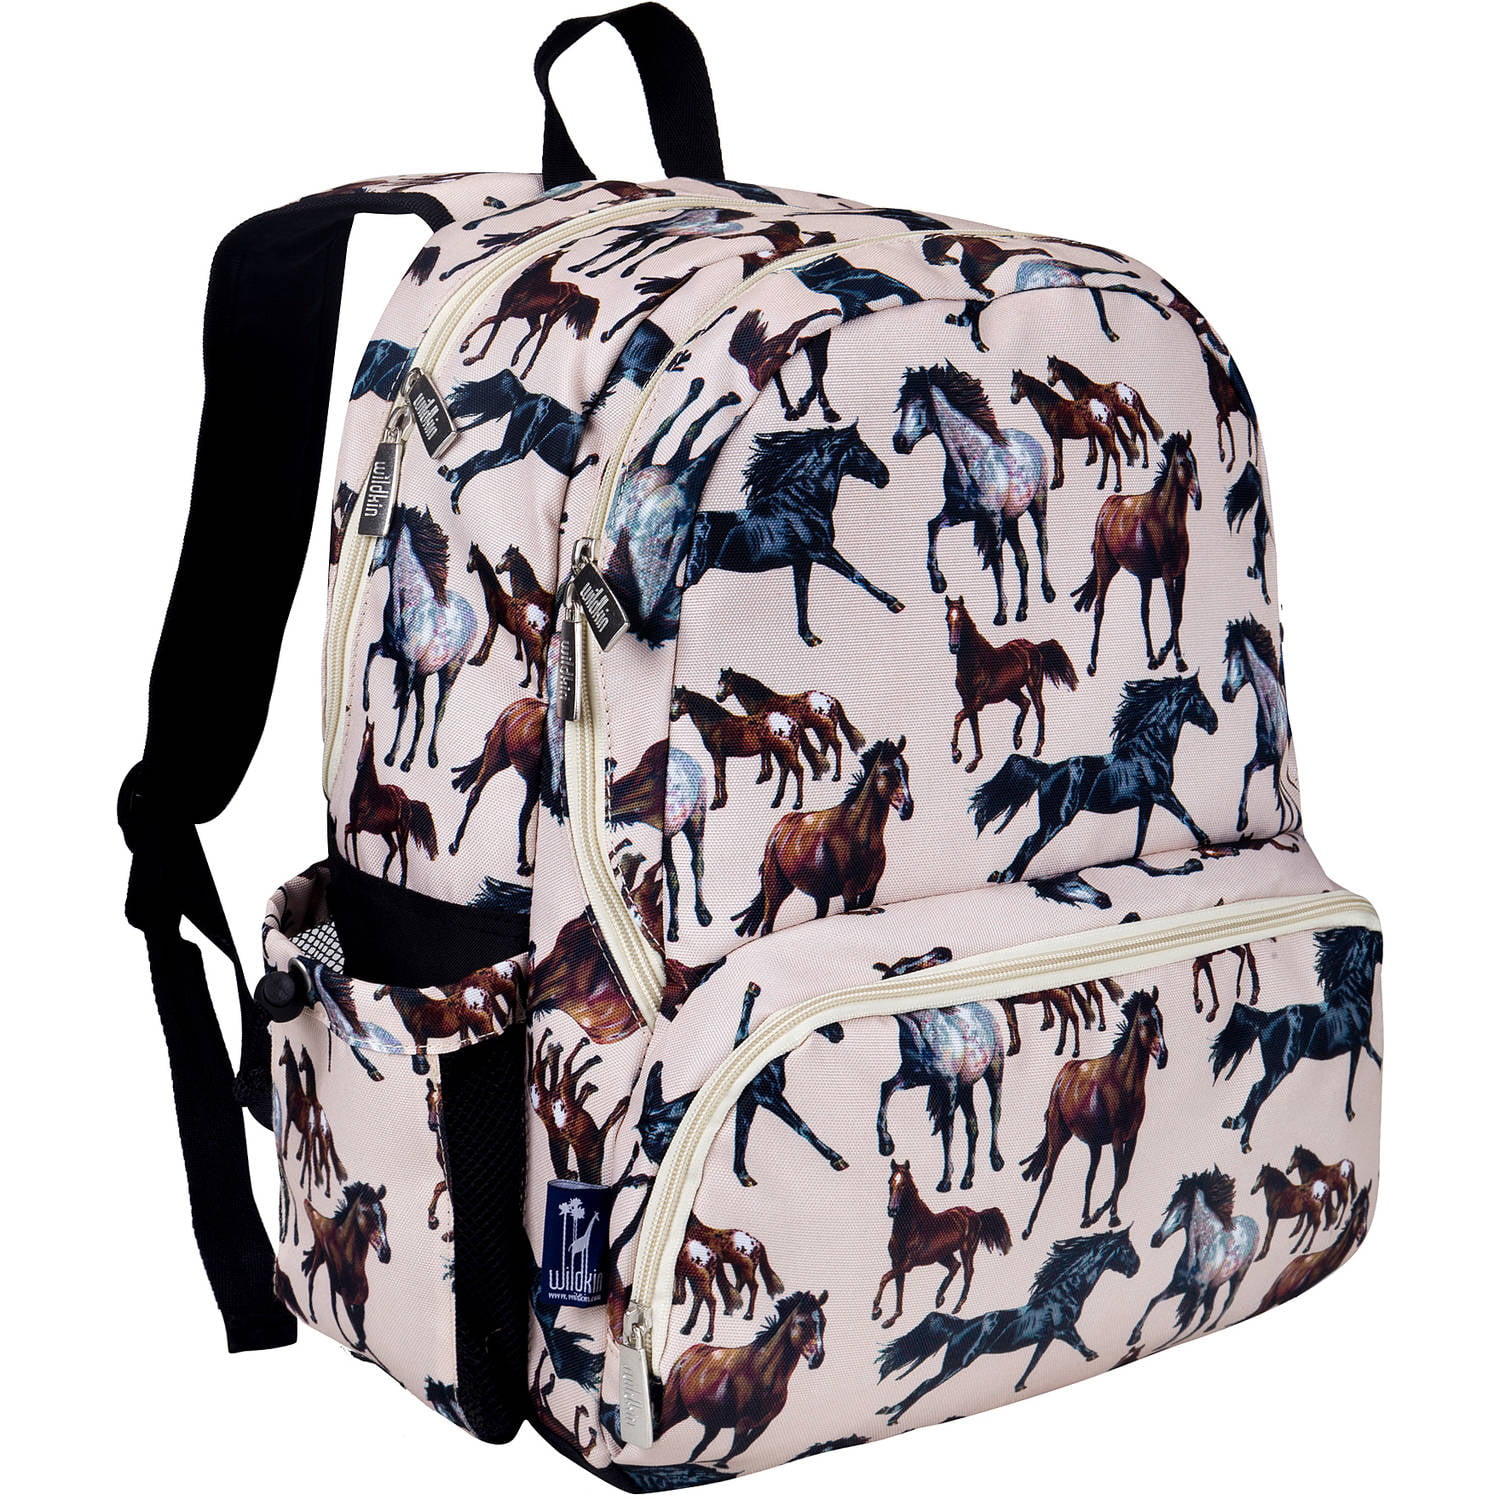 OREZI School Backpack for Girls Boys,Cute Hand Drawn Magic Unicorns Stars Bookbags Lightweight Laptop Travel Casual Daypack Rucksack for Student Teenagers kids 